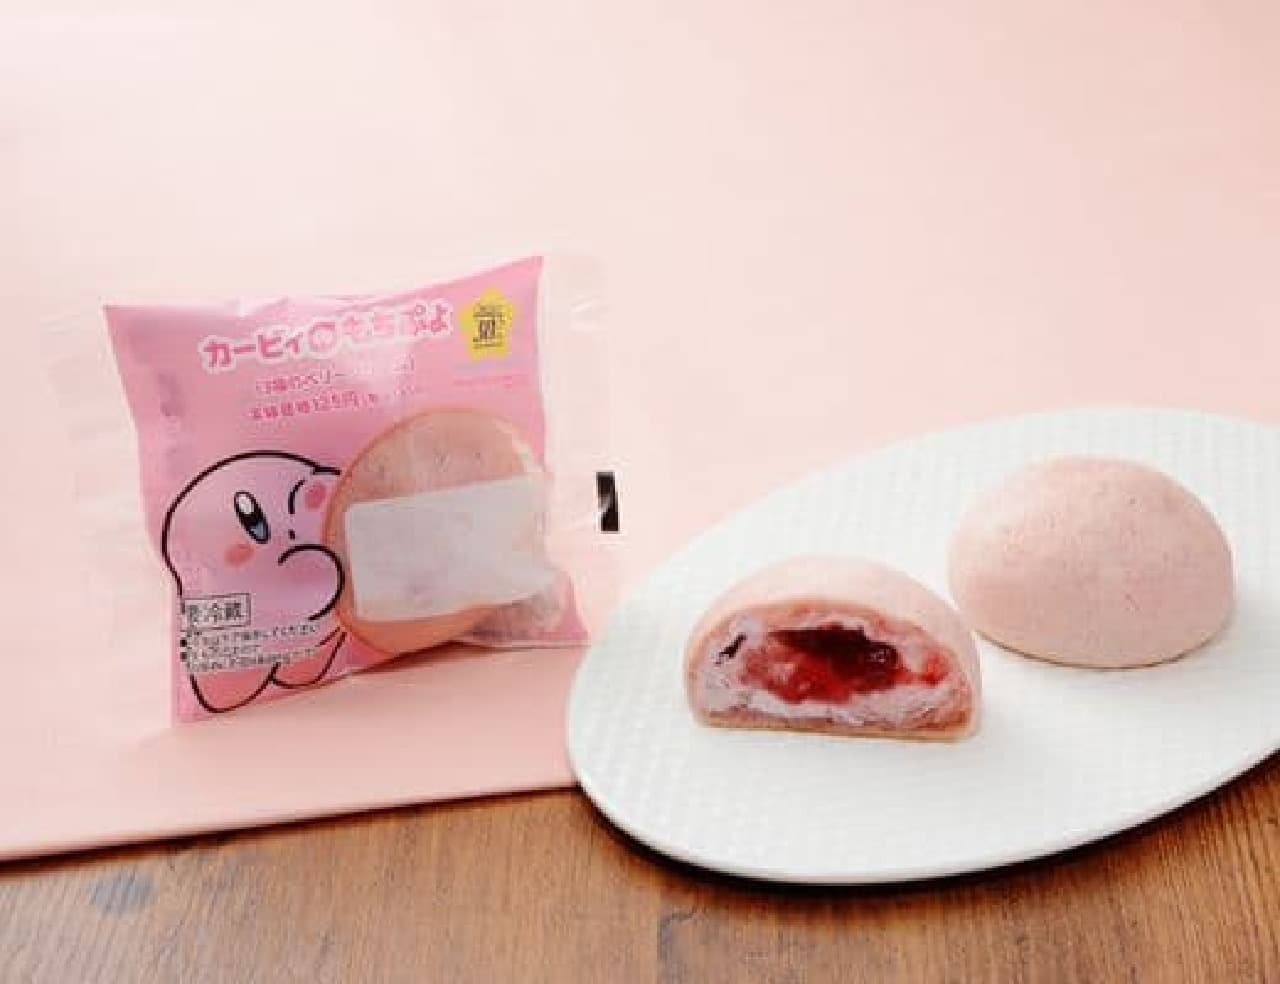 Lawson "Kirby's Mochi Puyo (3 kinds of berry cream)